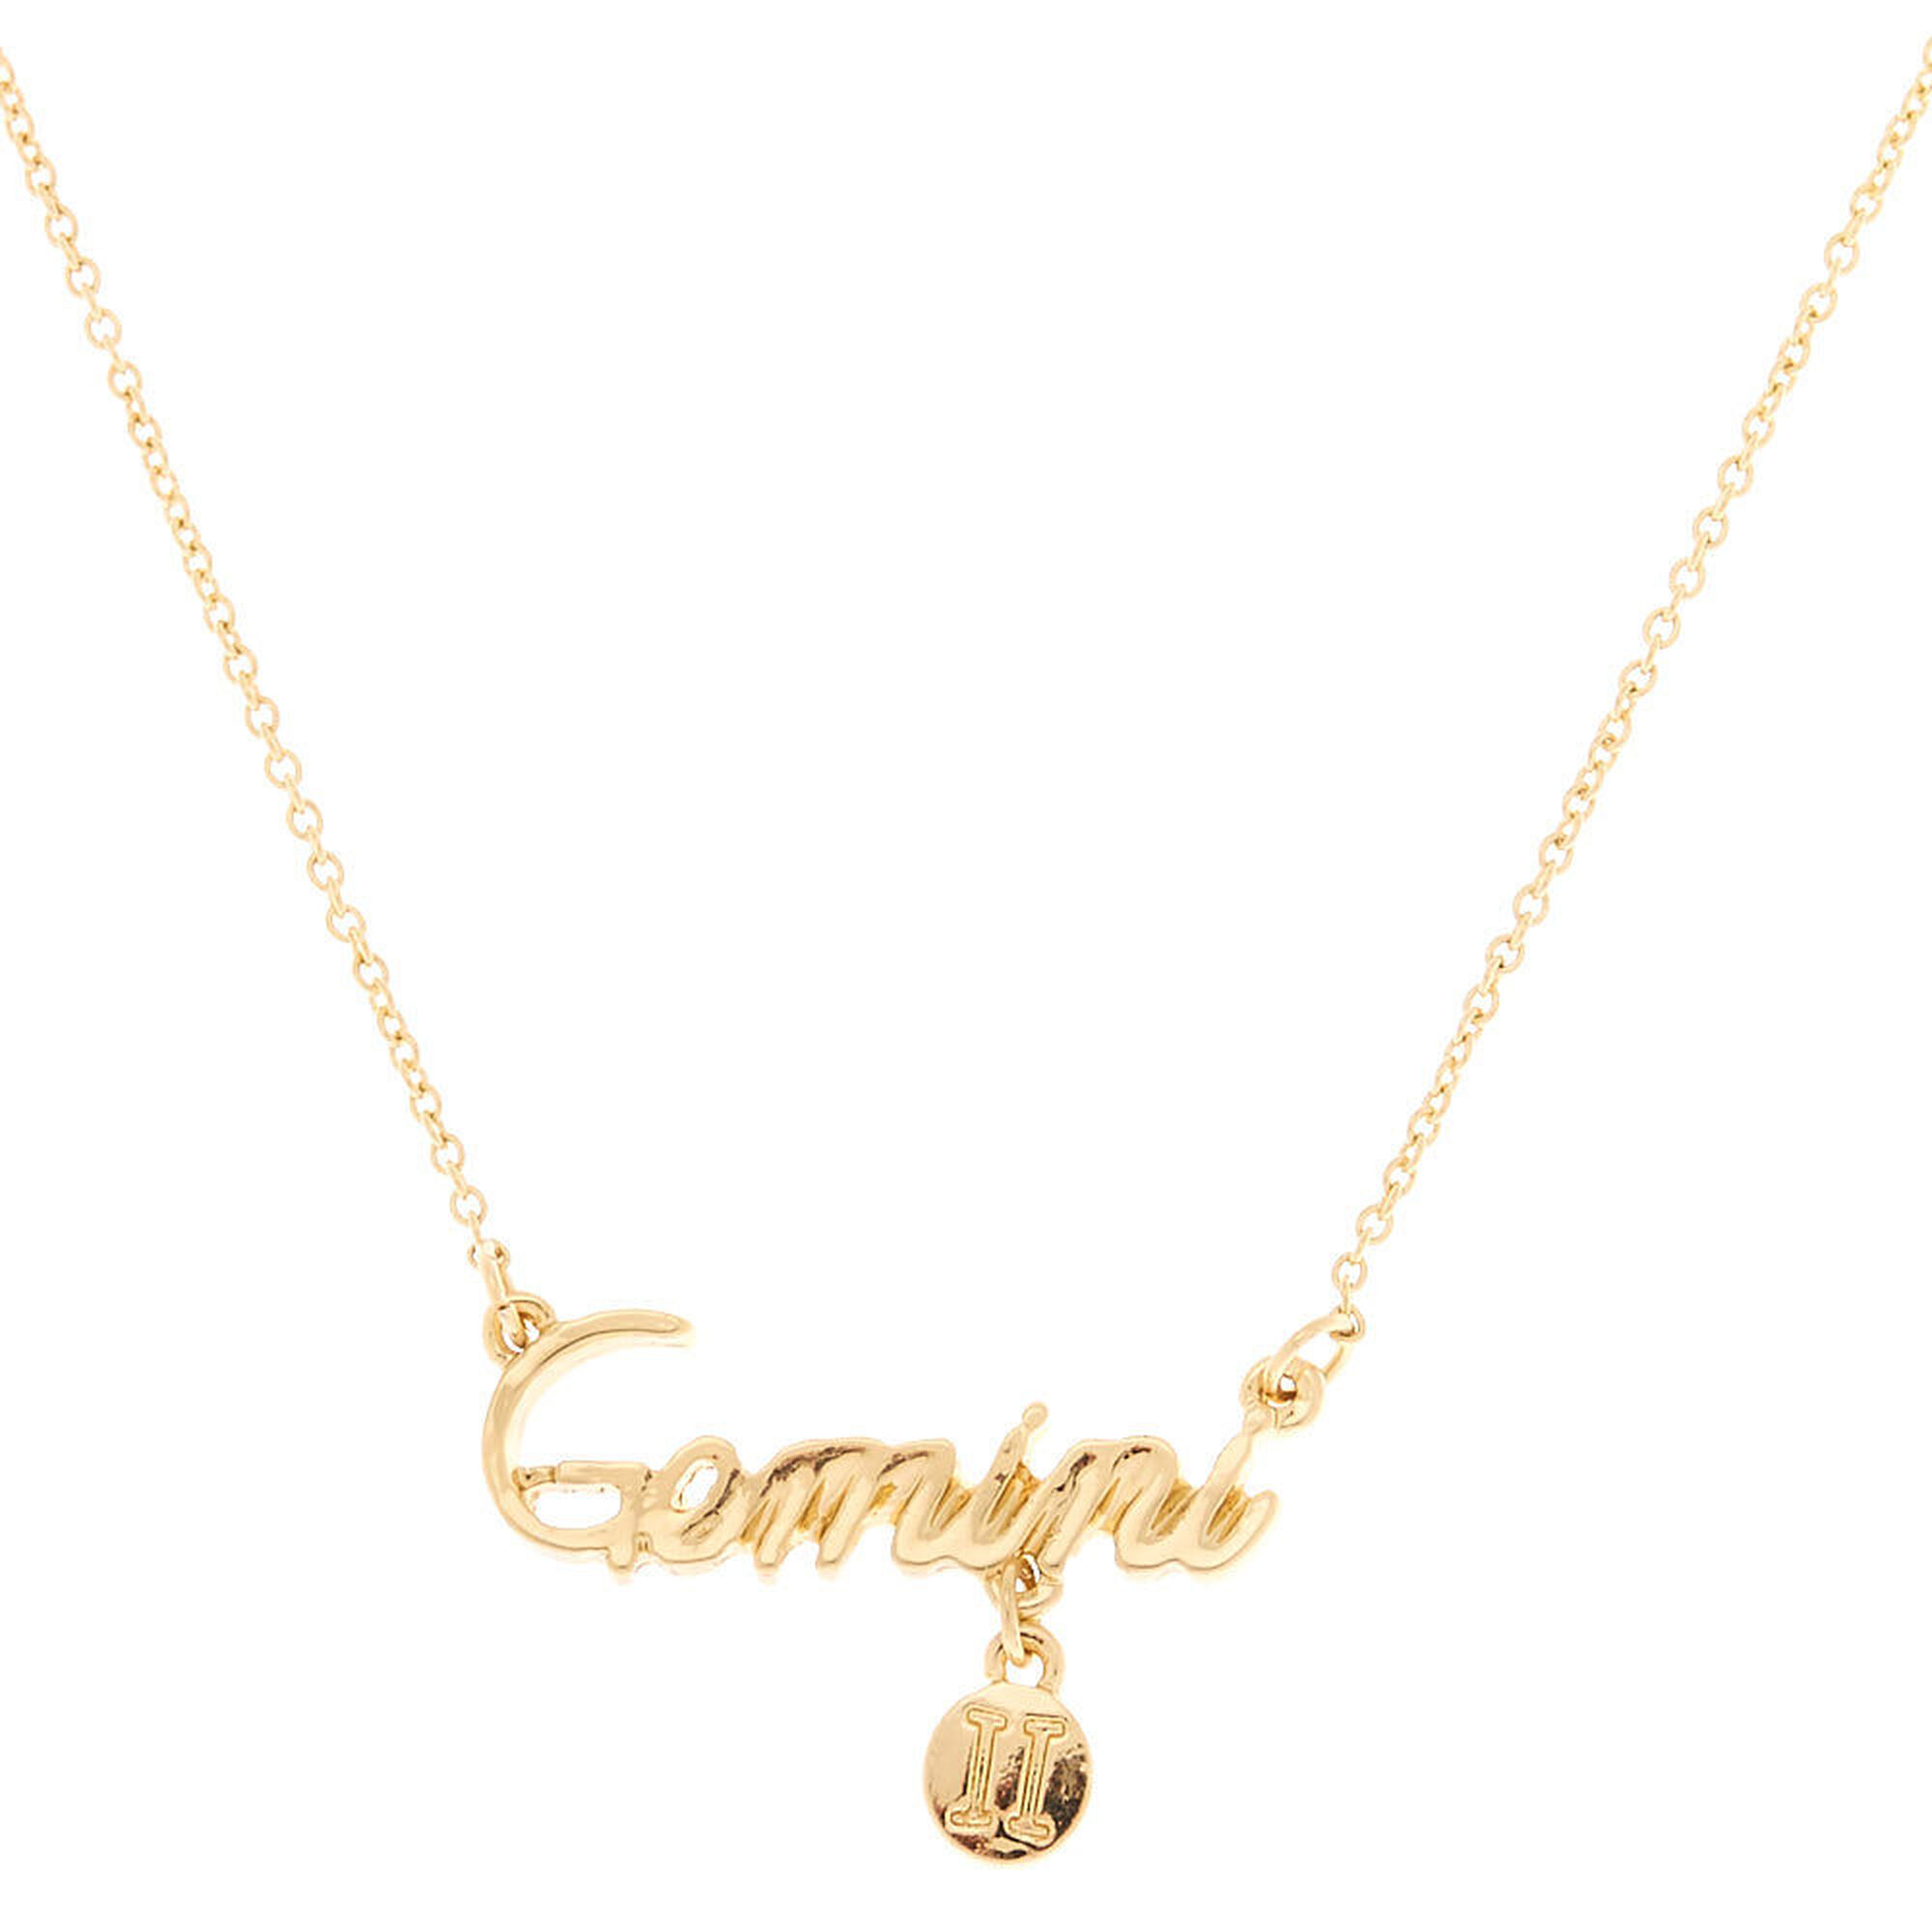 Gemini necklace gold swatch swiss